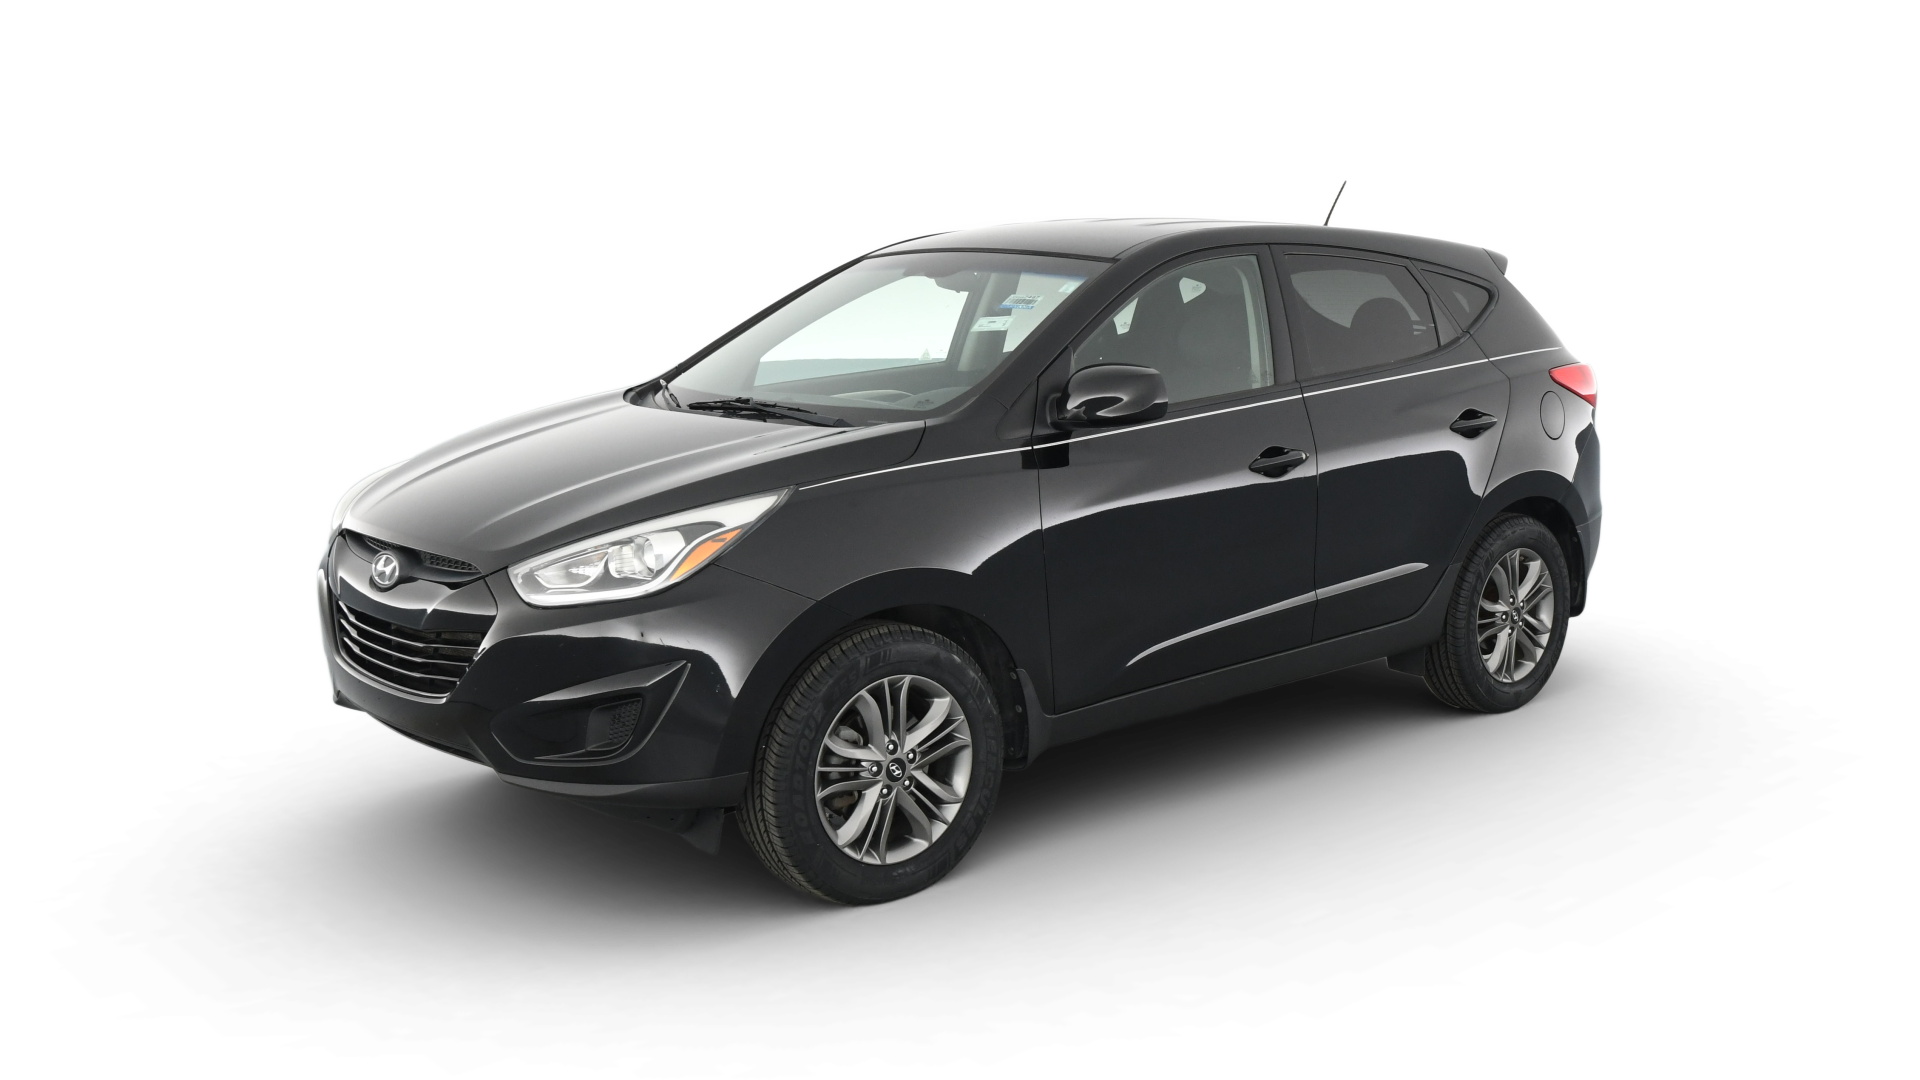 Used 2014 Hyundai Tucson For Sale Online | Carvana